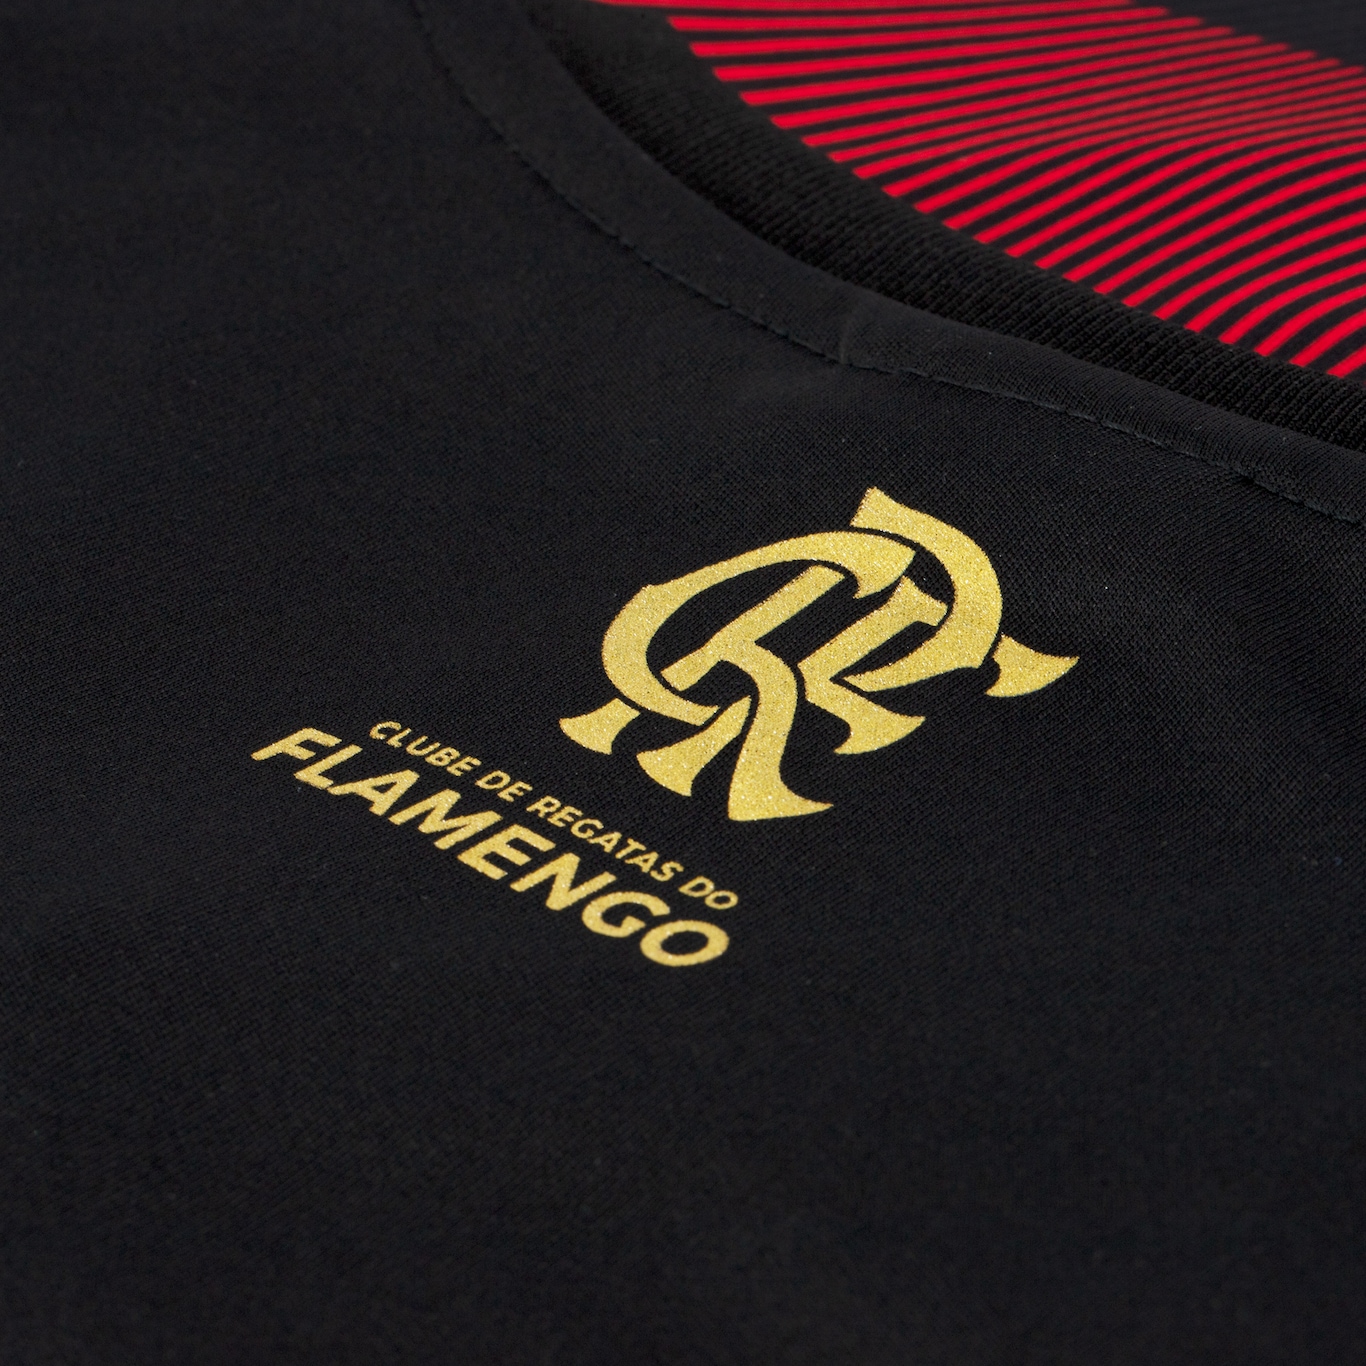 Camiseta do Flamengo Infantil Brains Braziline - Foto 3